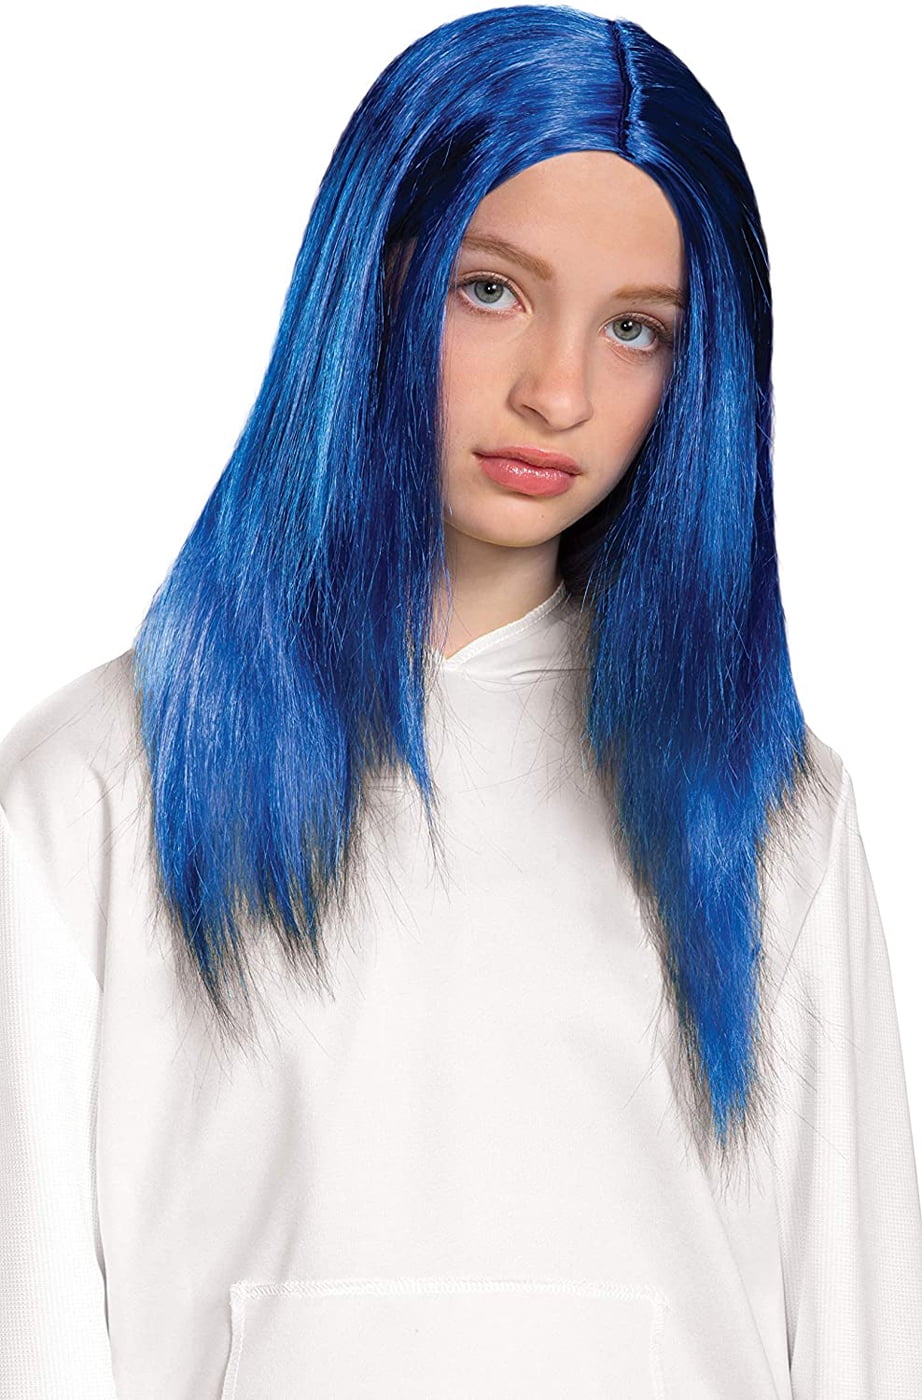 Billie Eilishs Best Hair Colors Over the Years  POPSUGAR Beauty